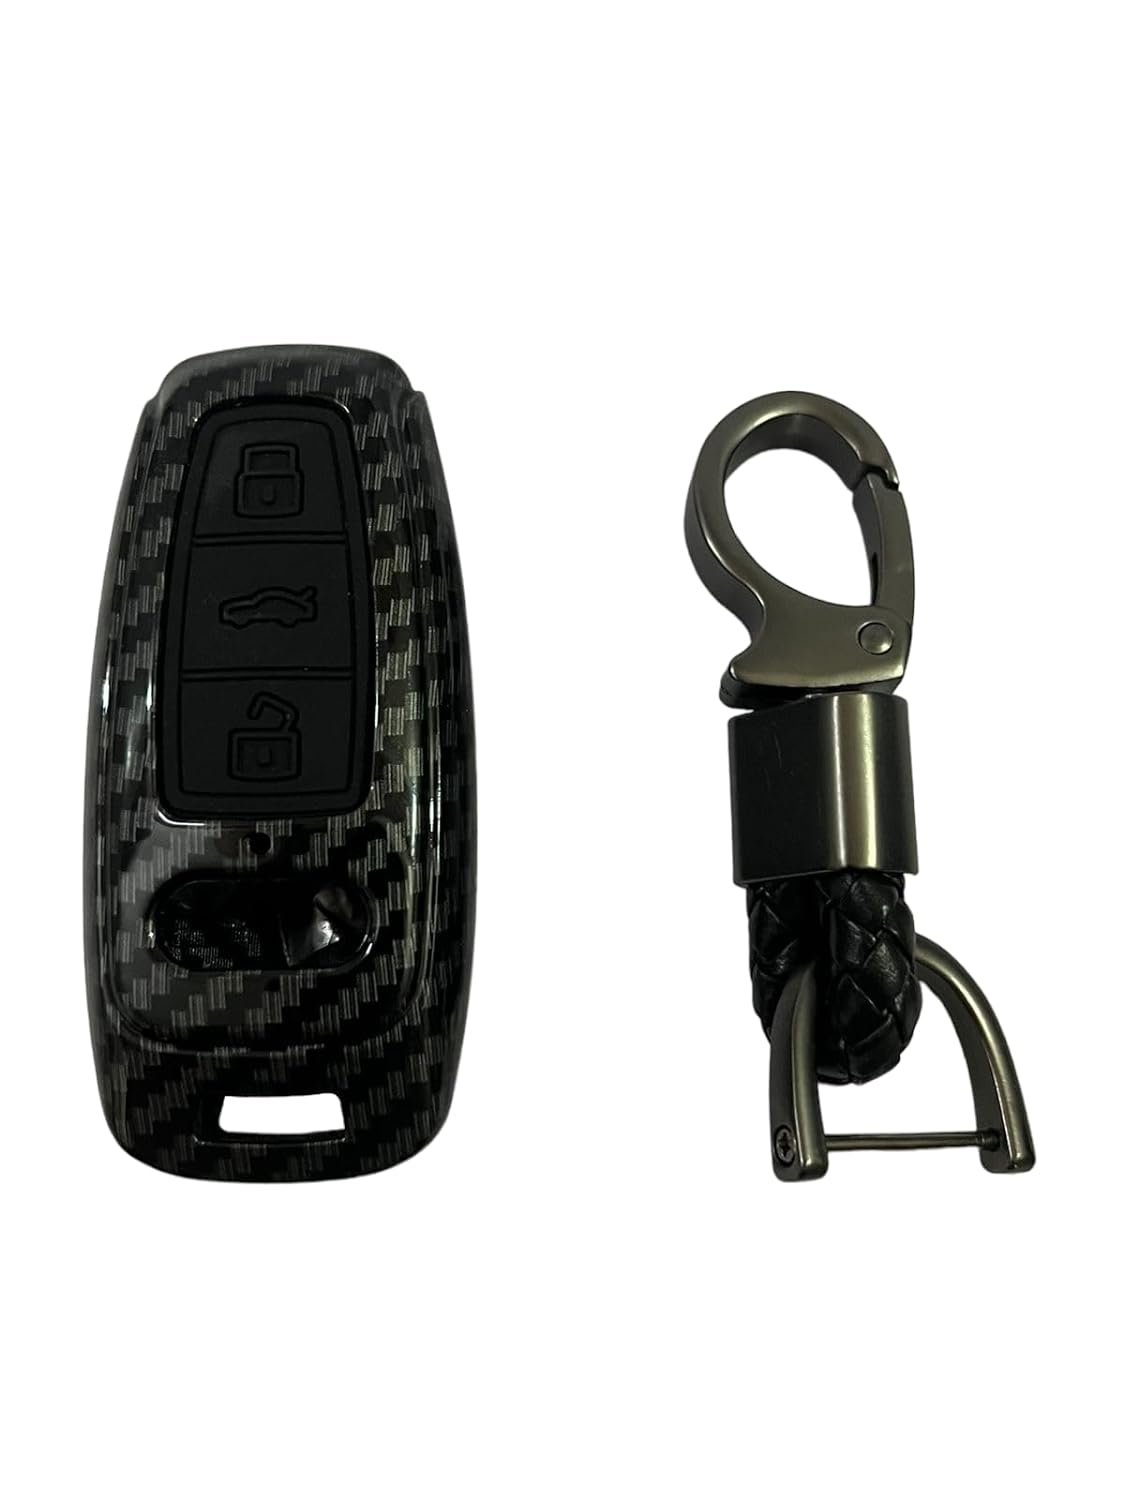  Carbon Fiber ABS Car Key Cover Compatible with Audi A3, A4, A5, Q3, Q5, Q7, Q8 Smart Key (Key Chain Included) Image 